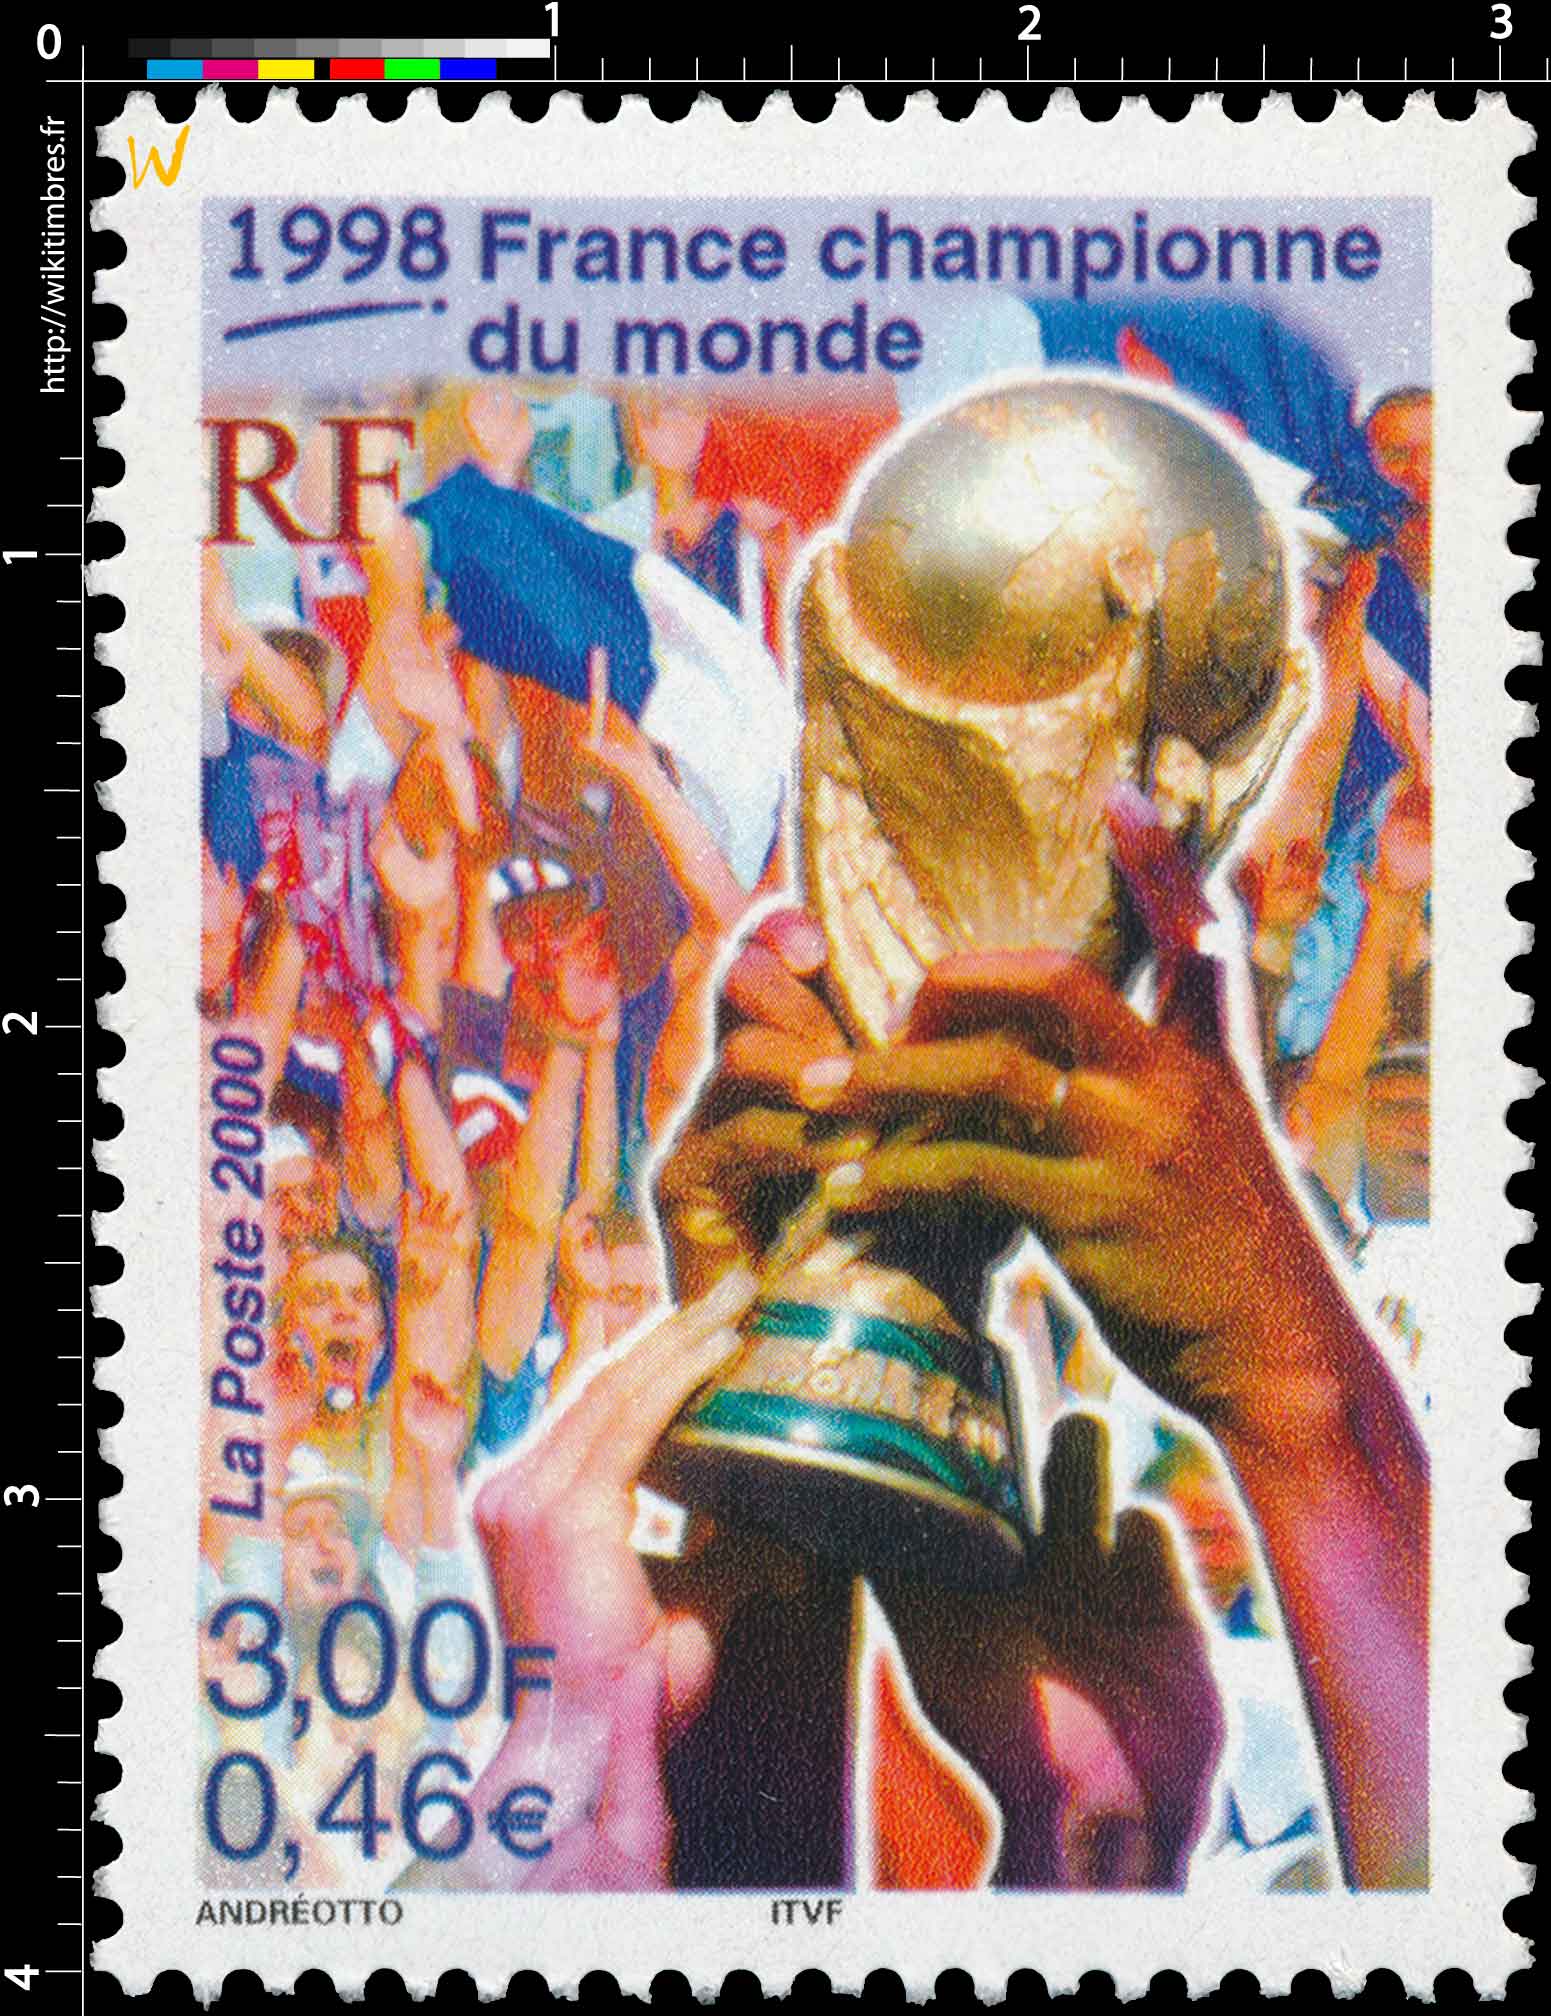 2000 1998 France championne du monde